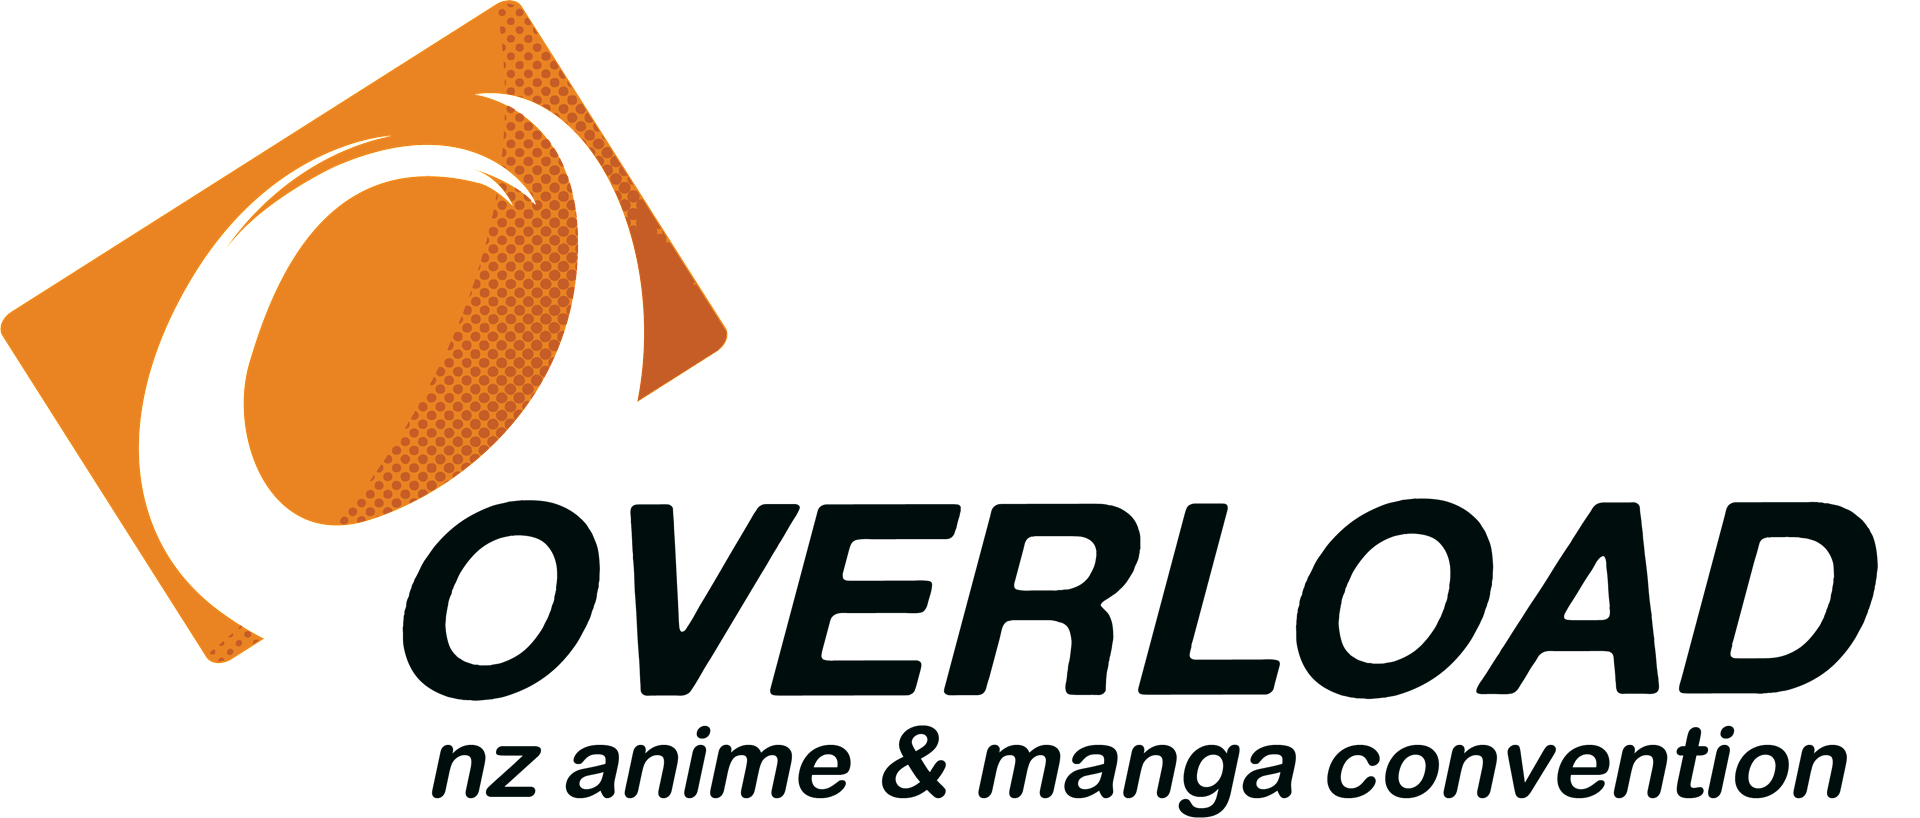 Overload Anime Manga Convention